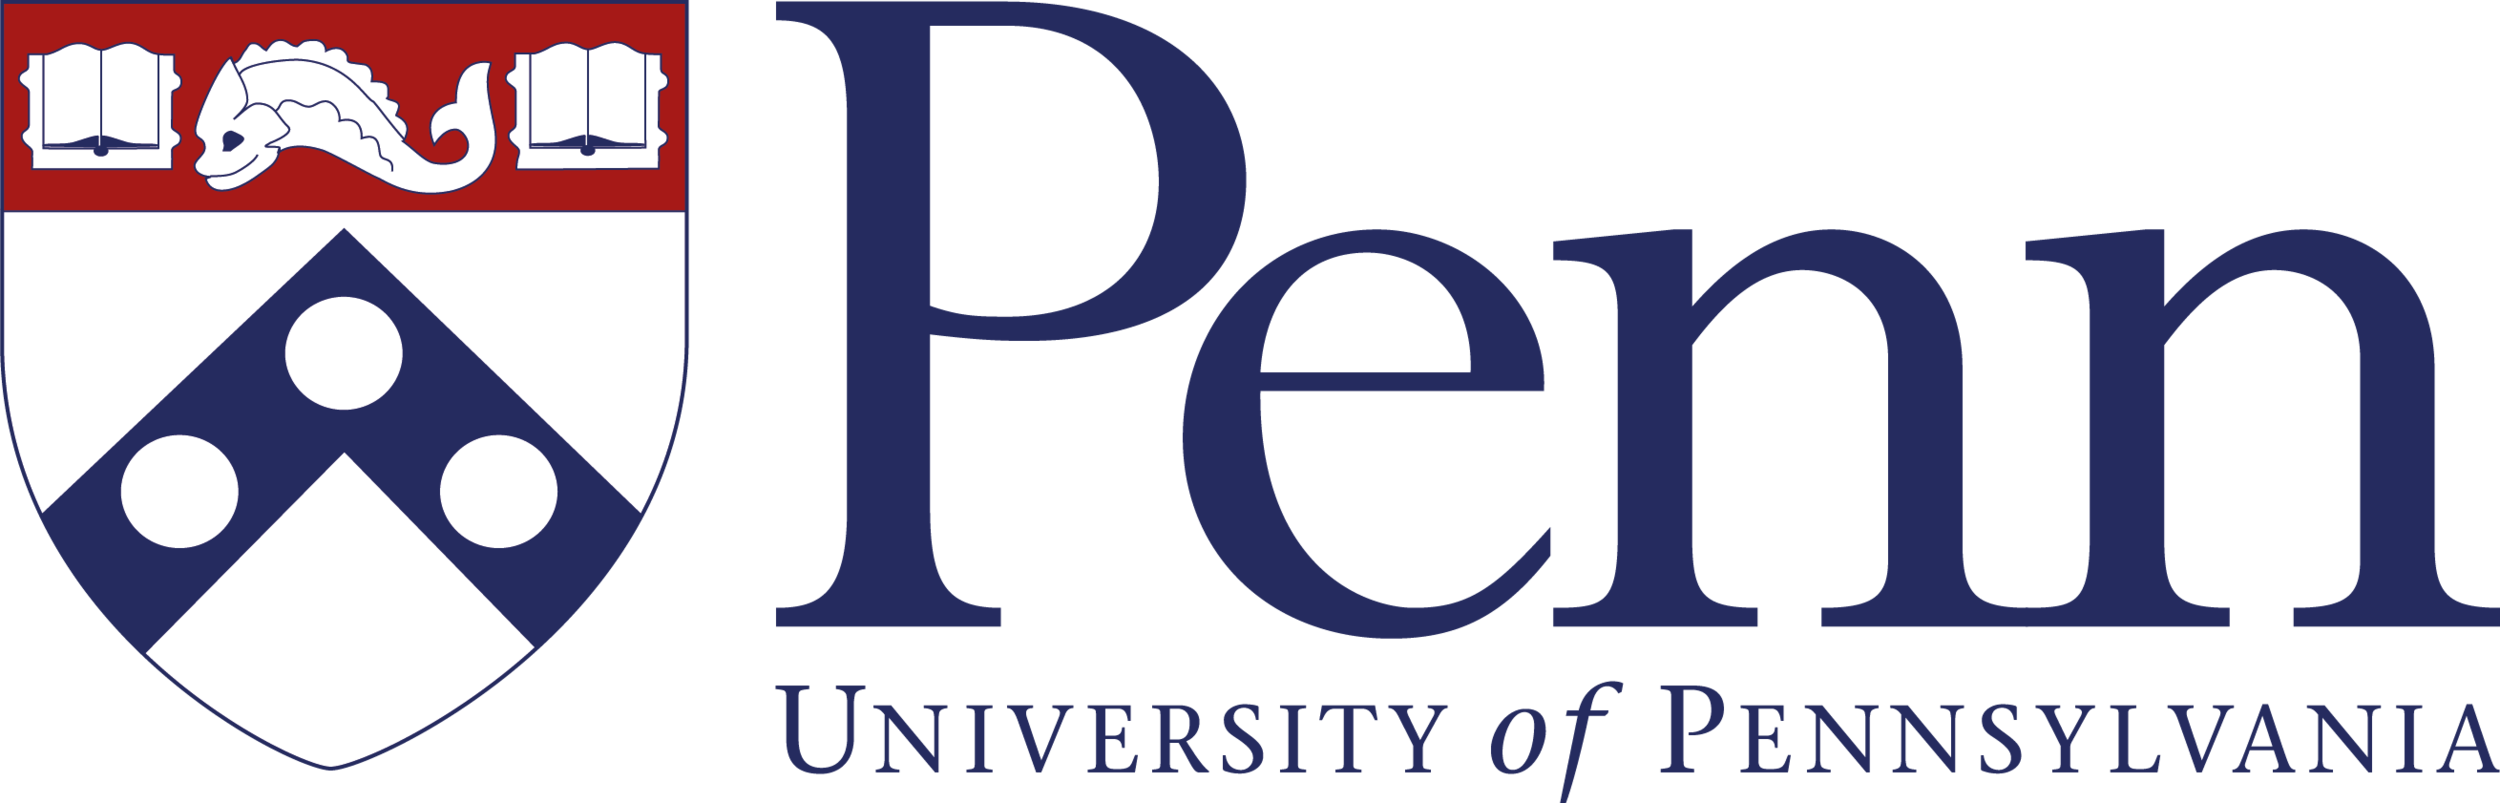 Penn_Logo_University_of_Pennsylvania.png